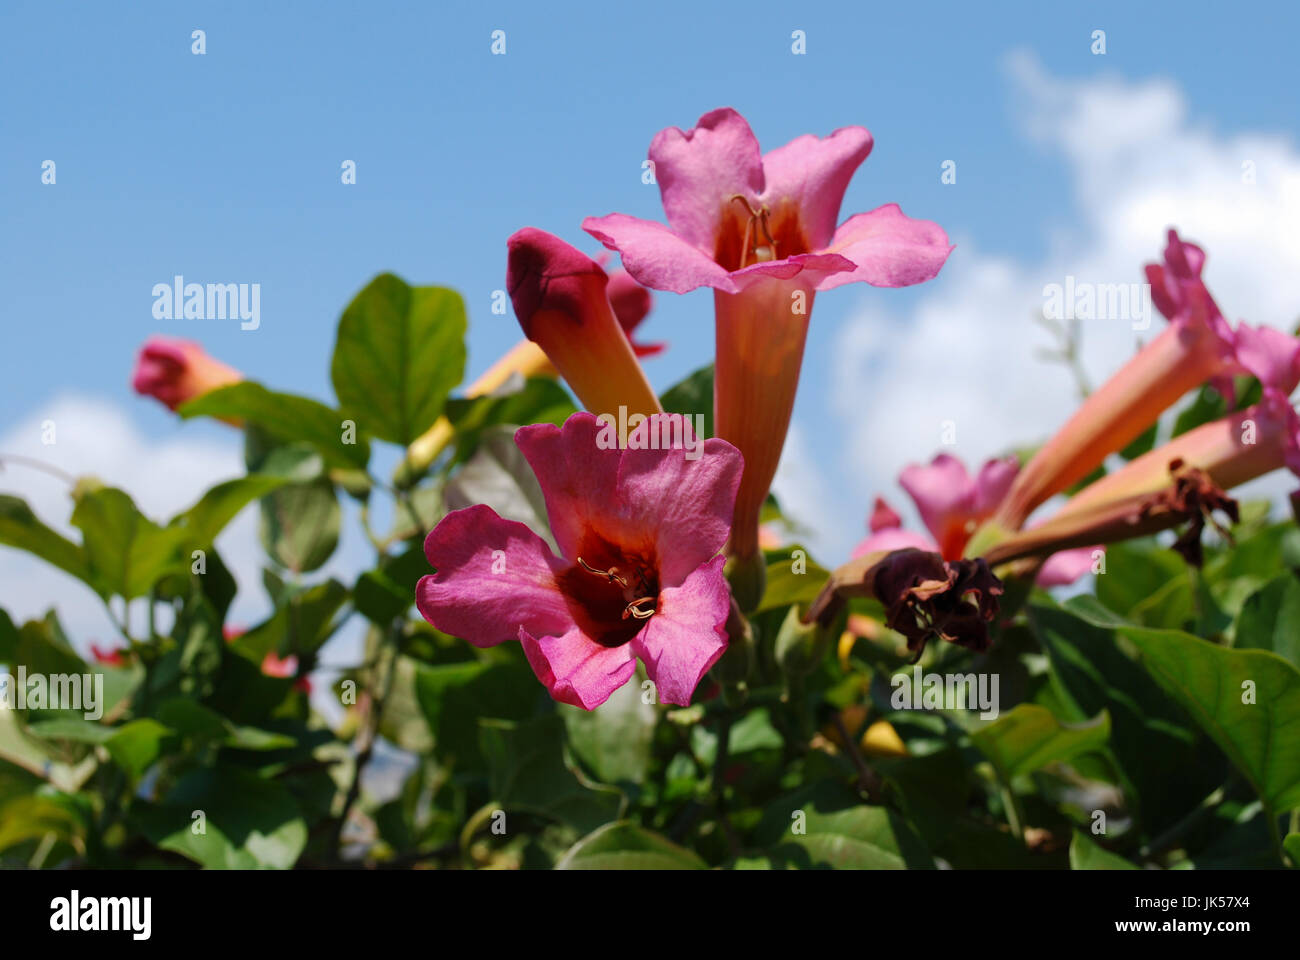 Bignonia capreolata (Bignoniaceae family) pink flowers blossom on the blue sky background. Stock Photo